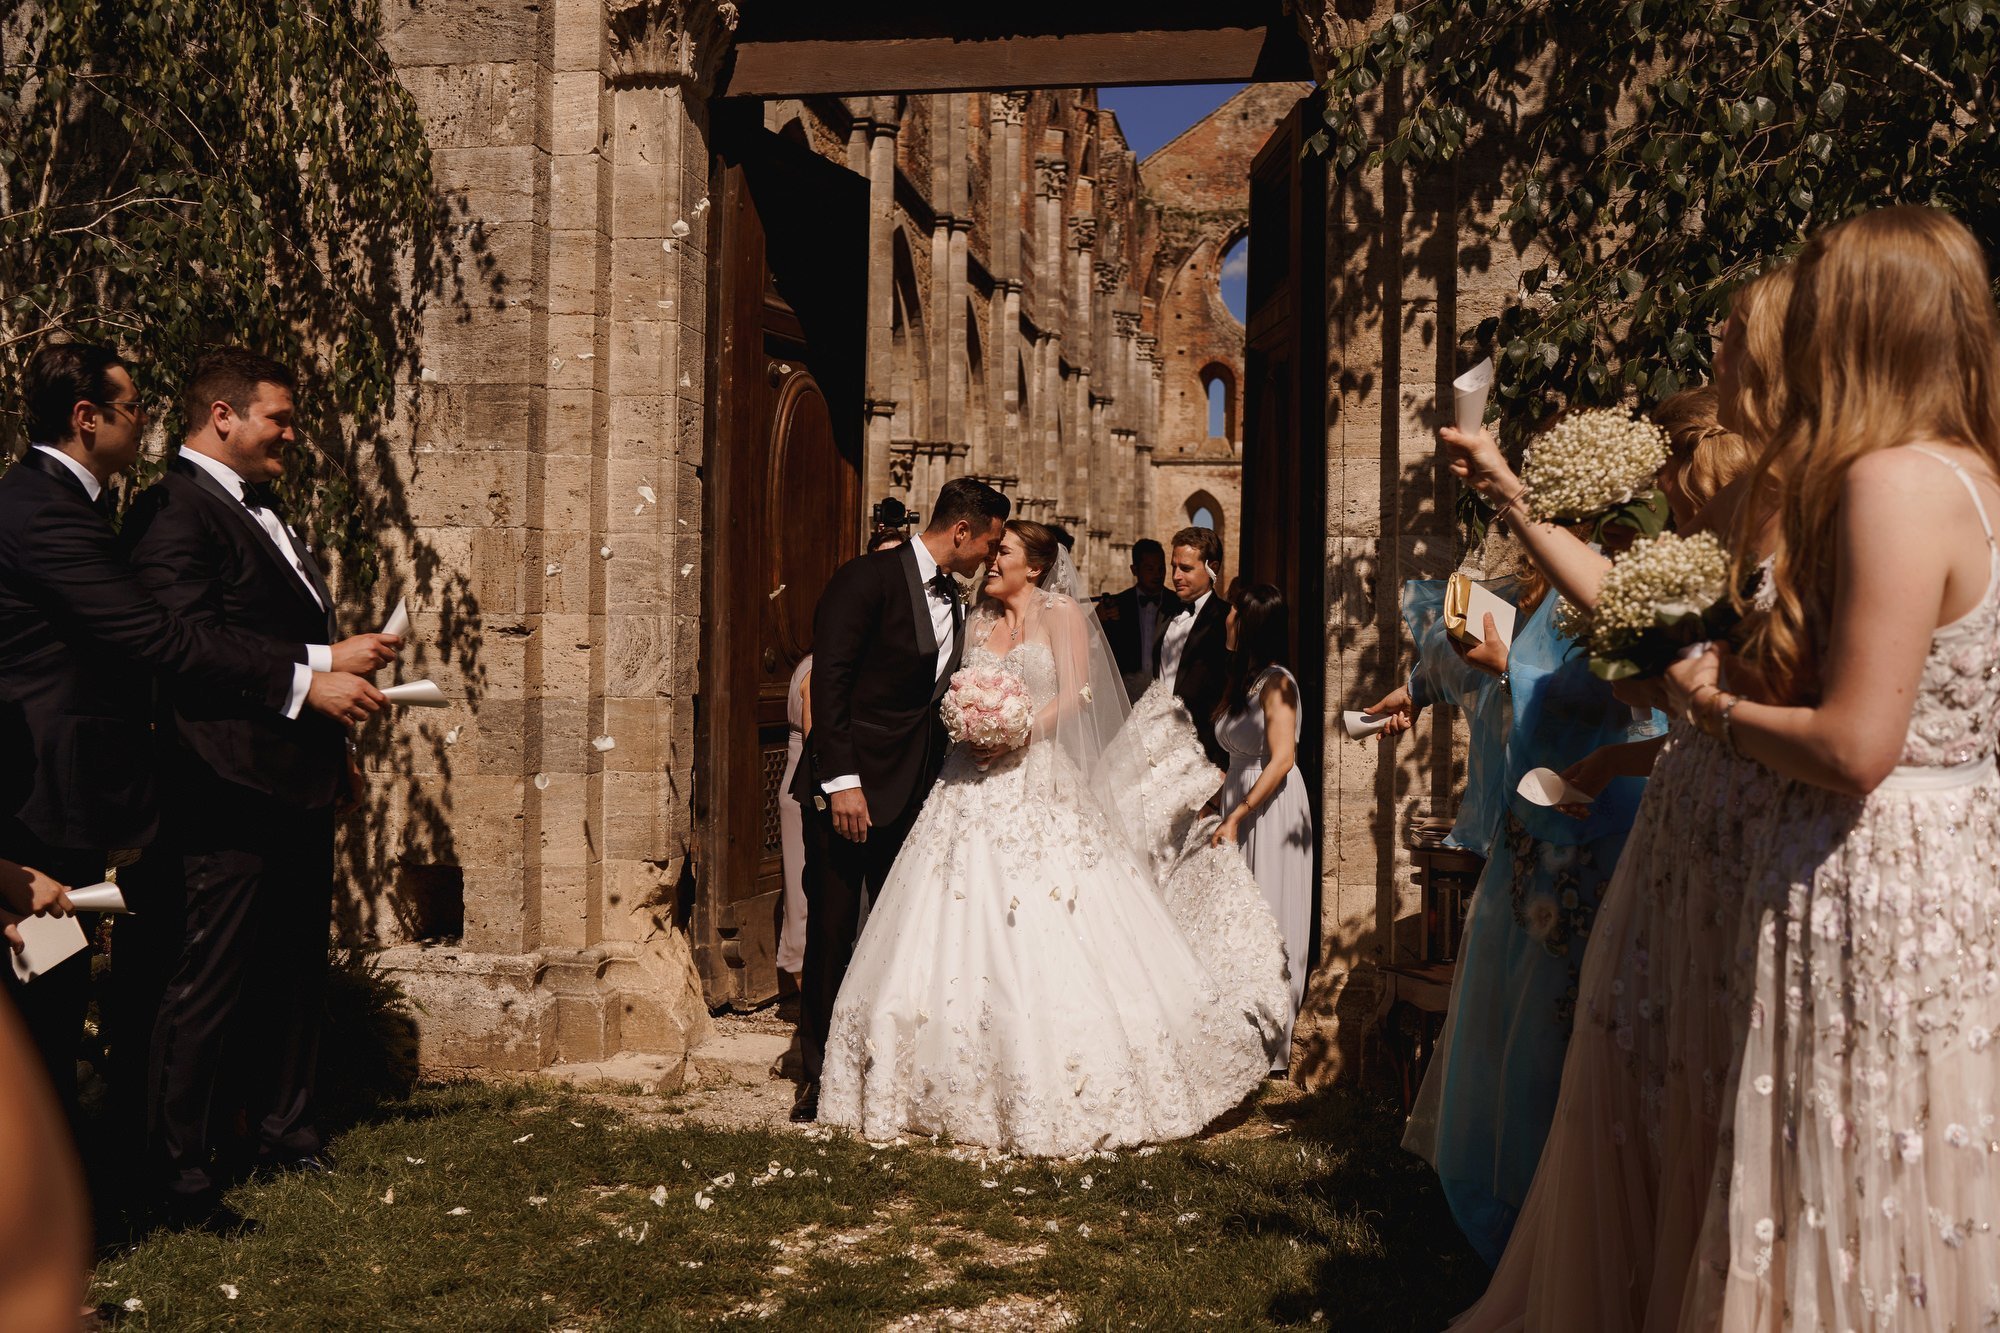 San galgano abbey weddings - luxury destination wedding photography by arj photography